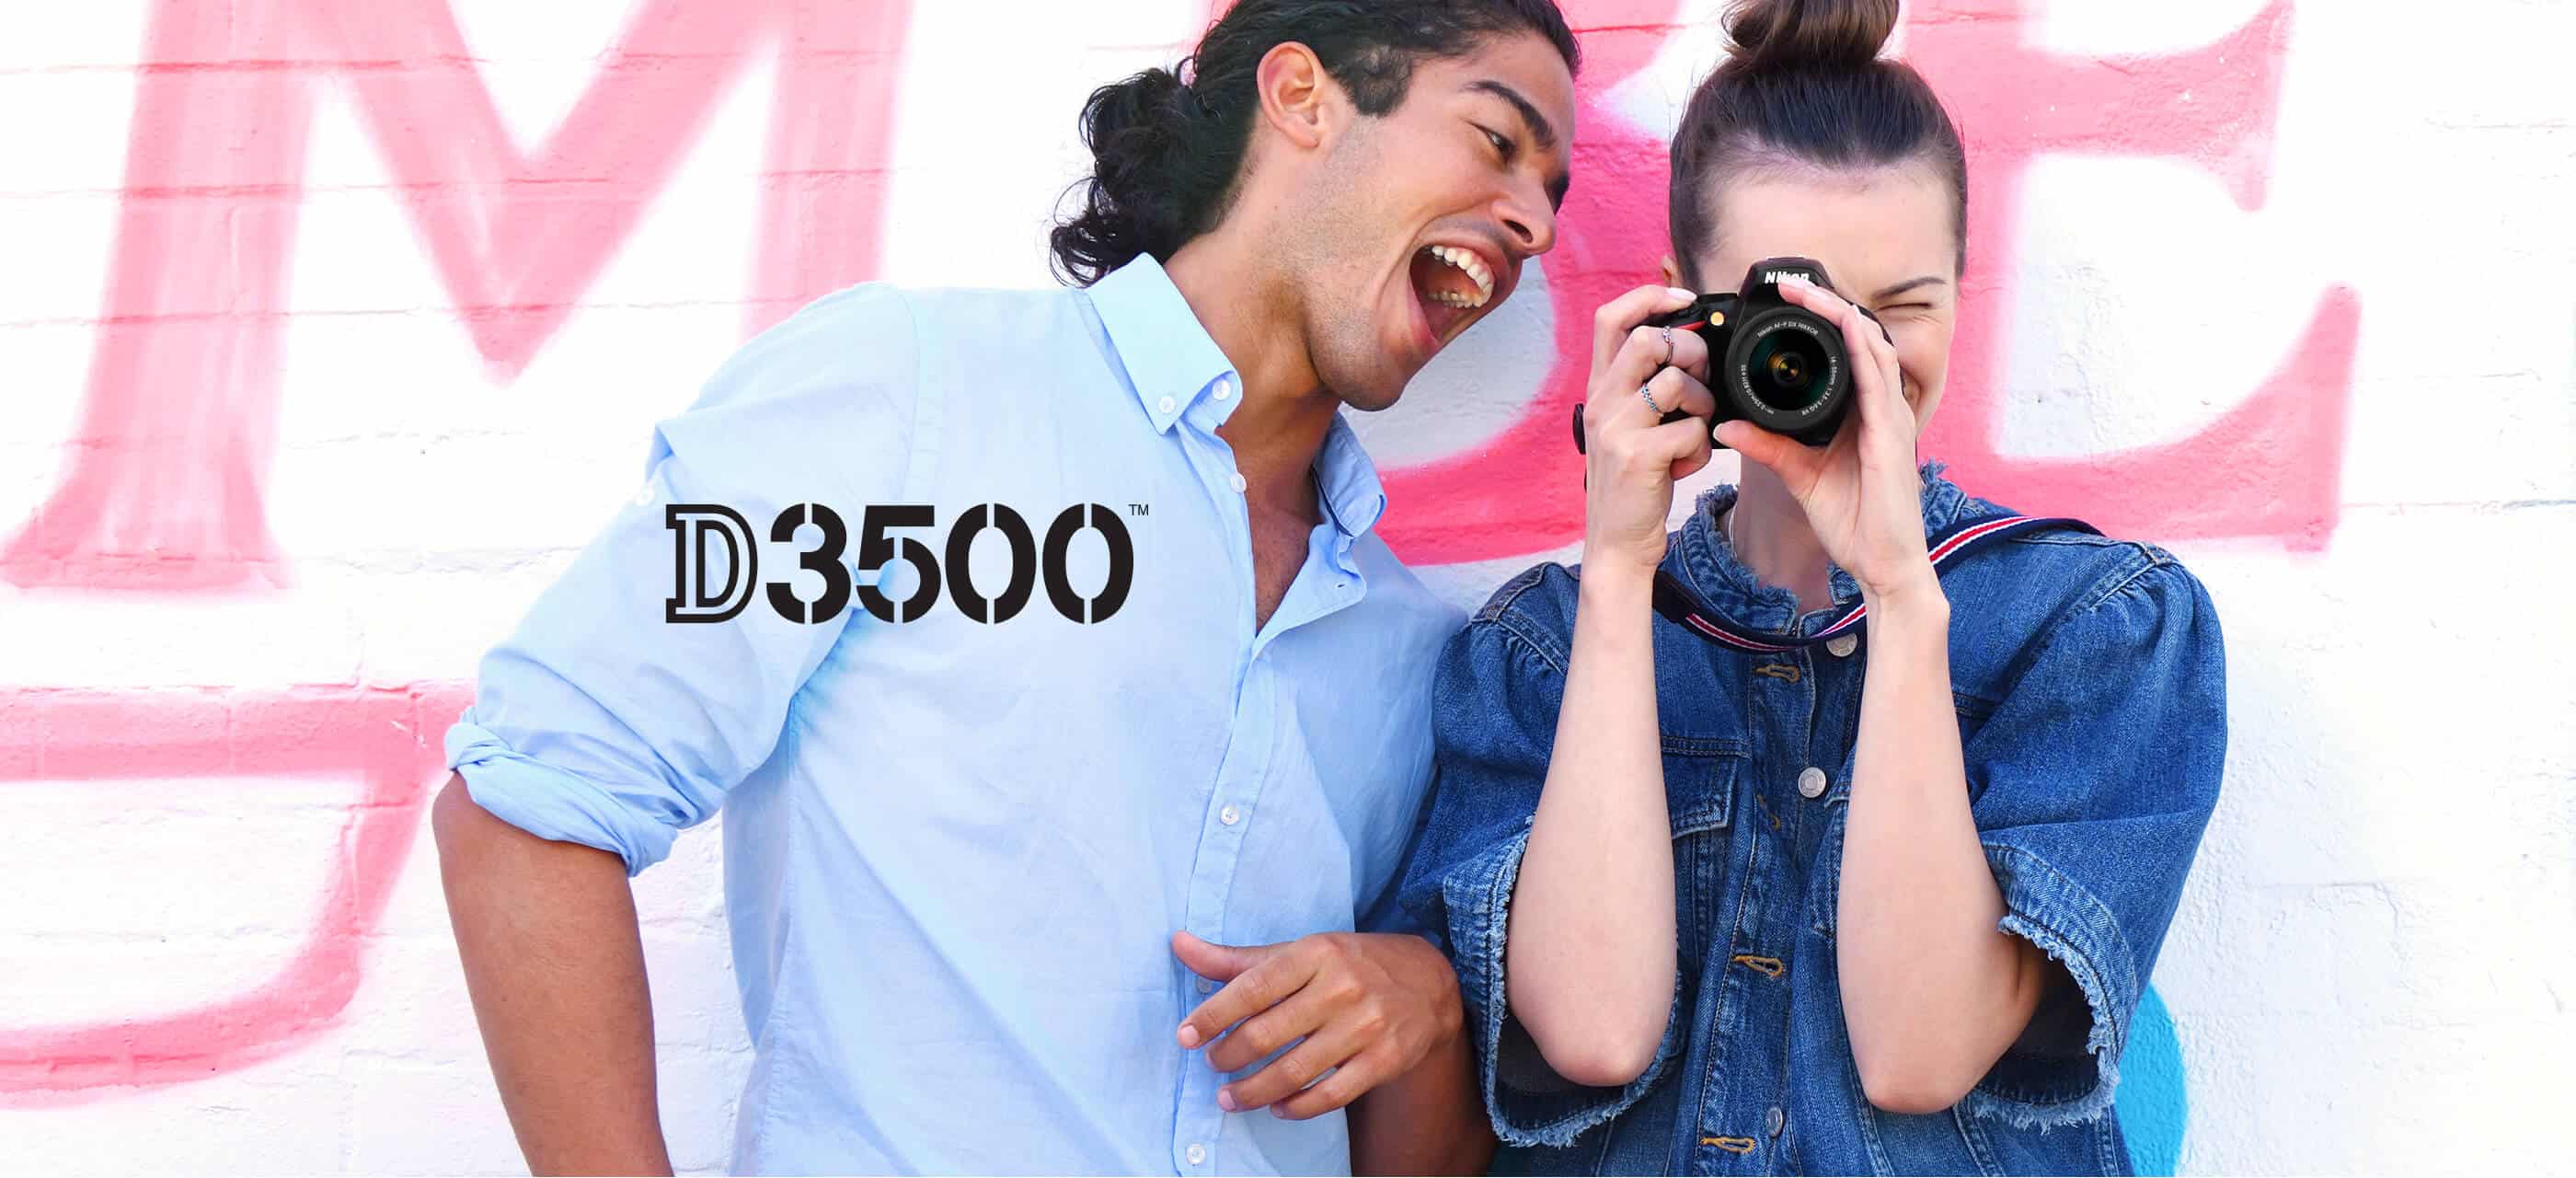 DSLR 3500 cameras by Nikon